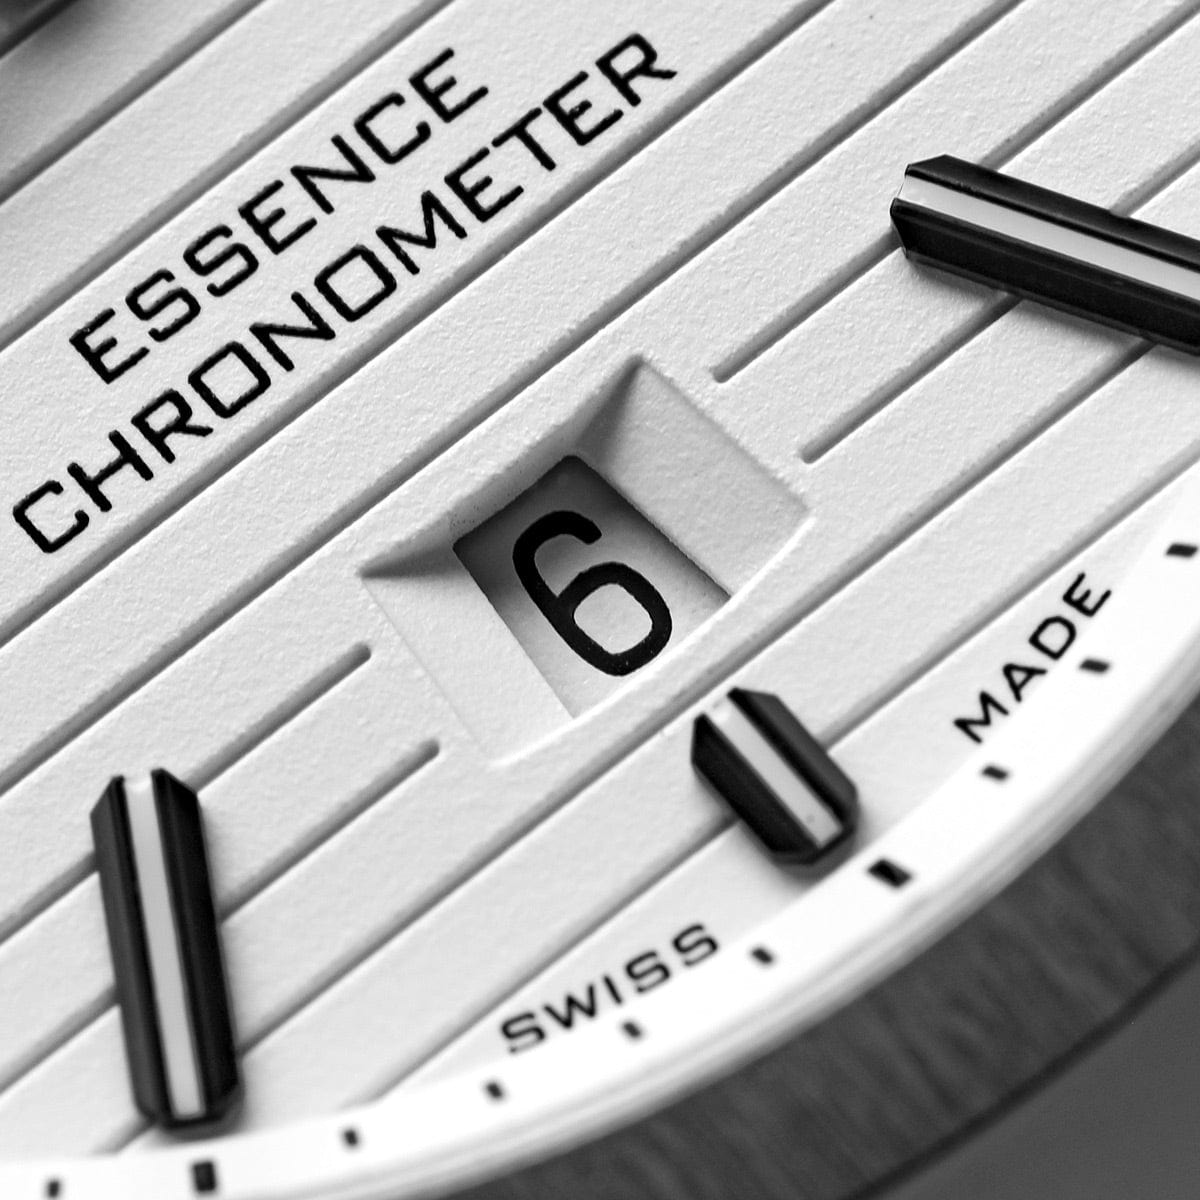 Formex Essence 39 Automatic Chronometer Watch - Green / Steel Bracelet